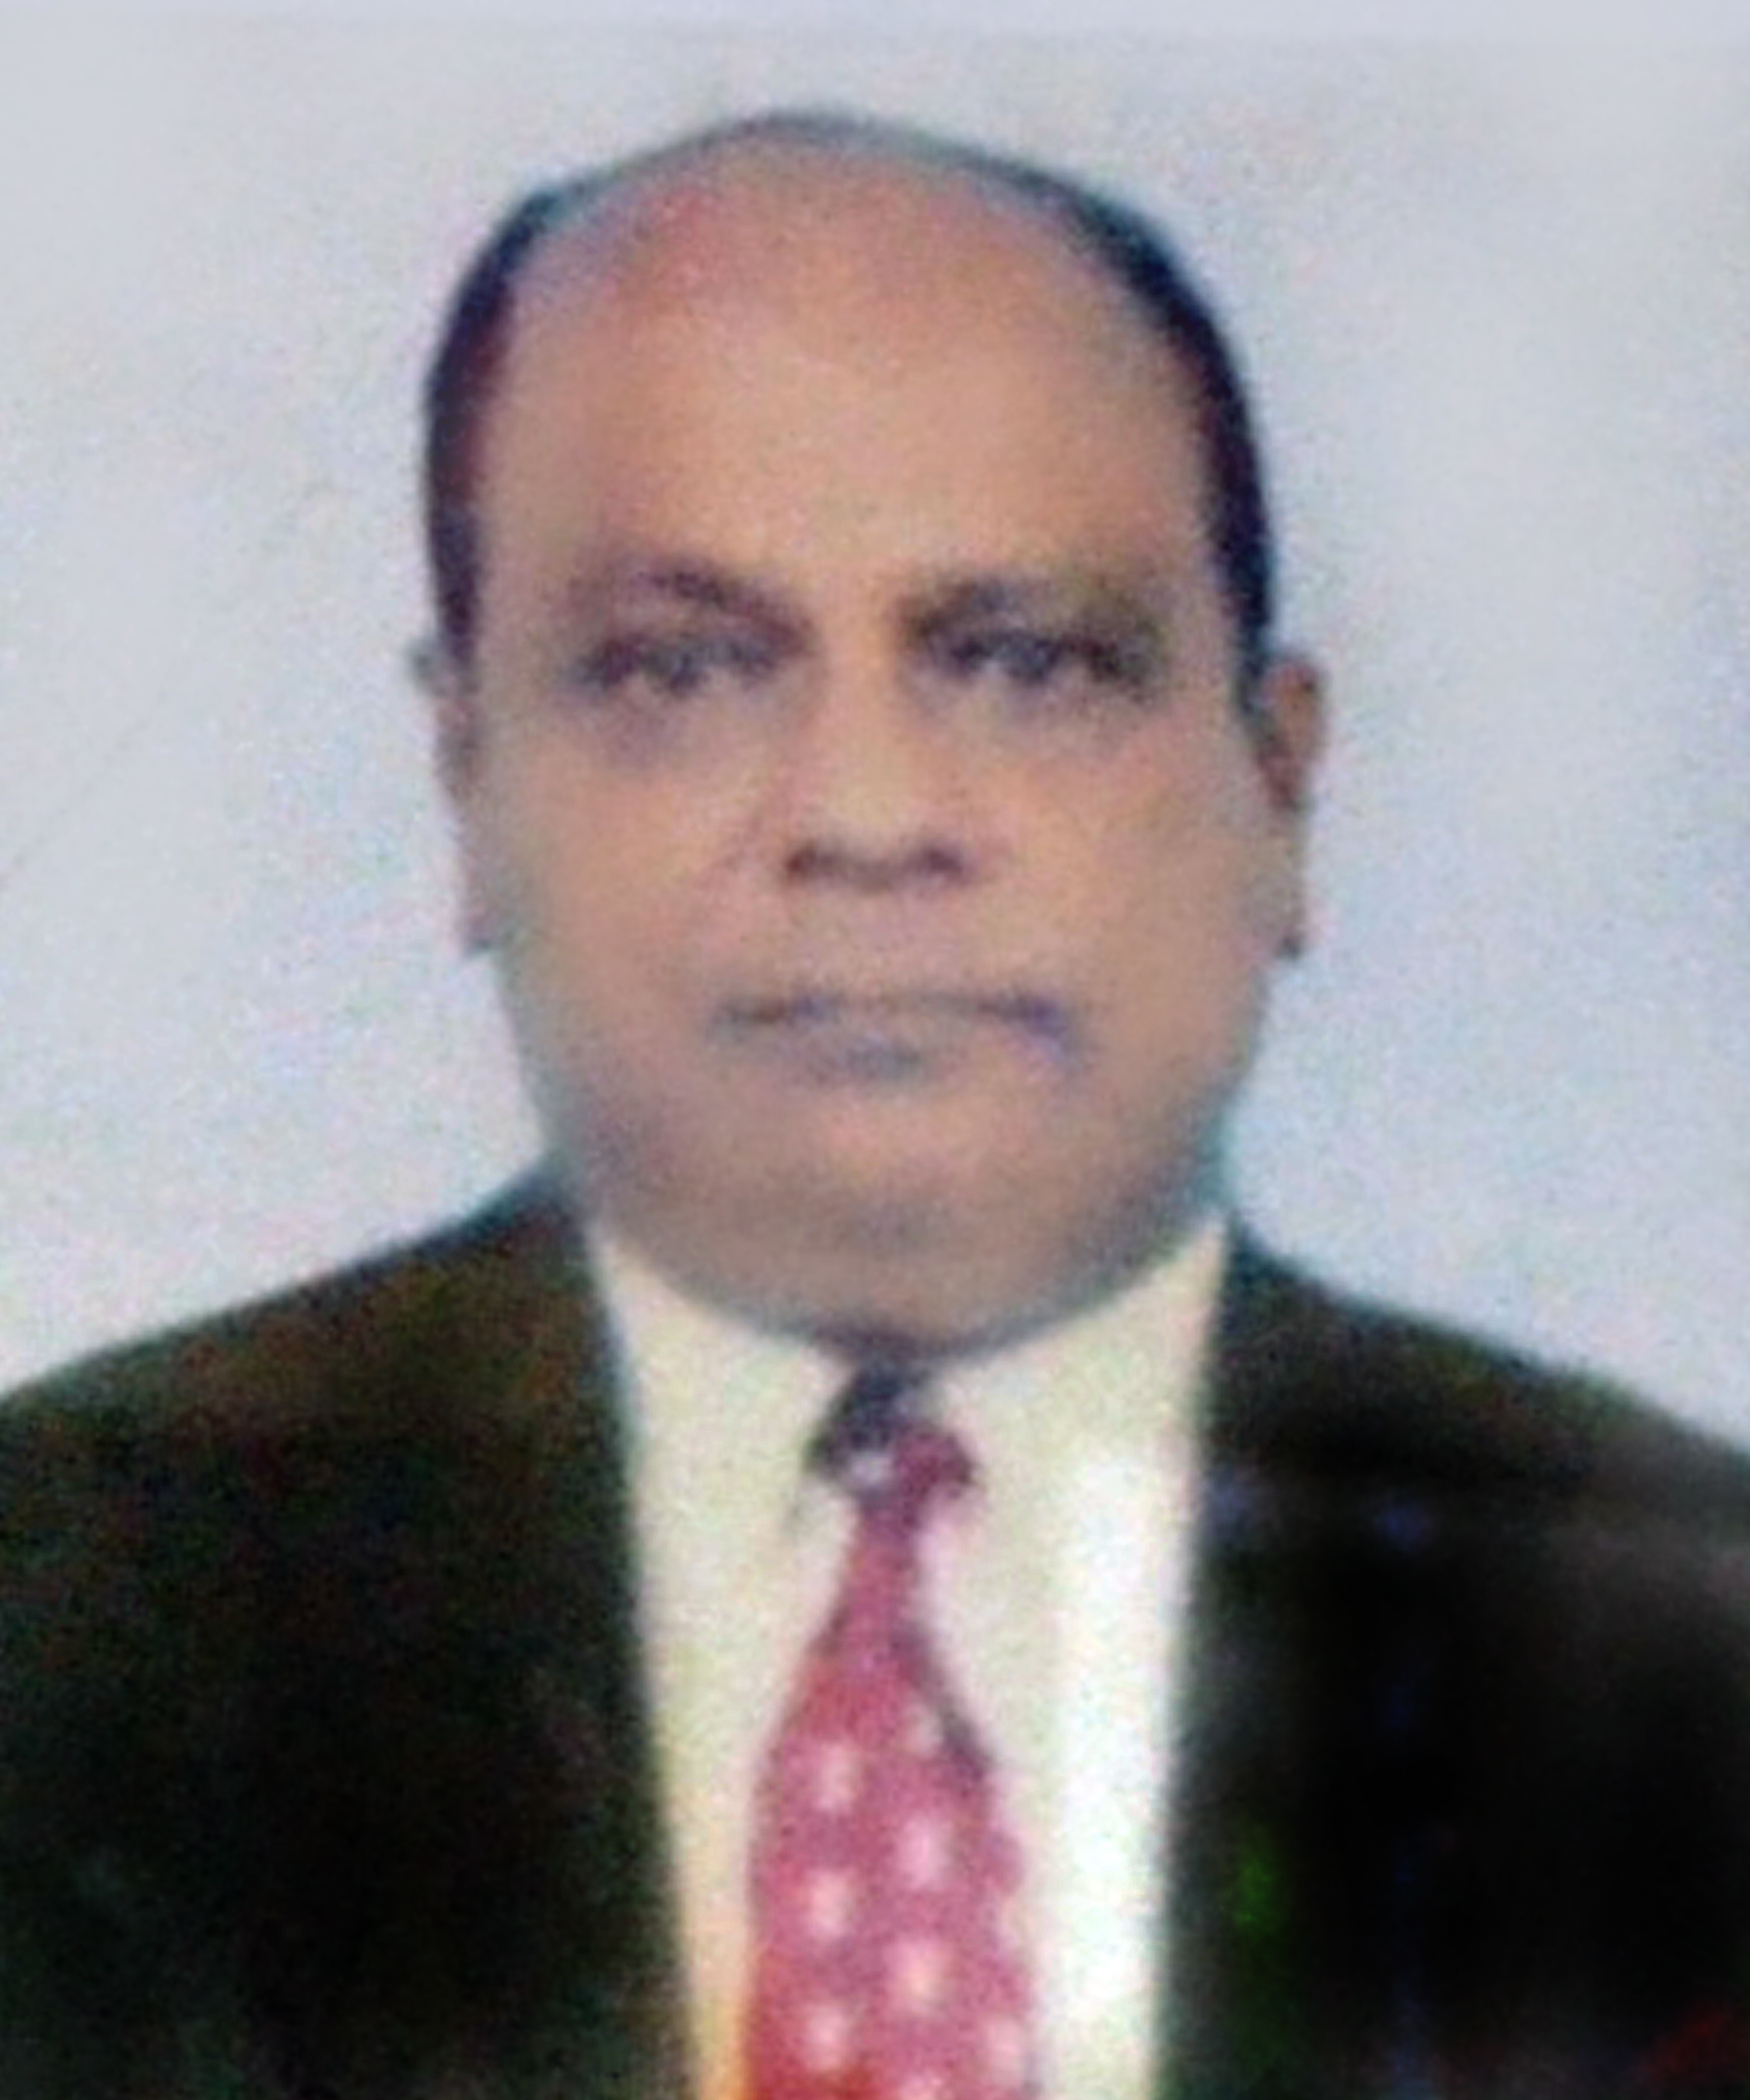 Dr. Kshanada Mohan Das